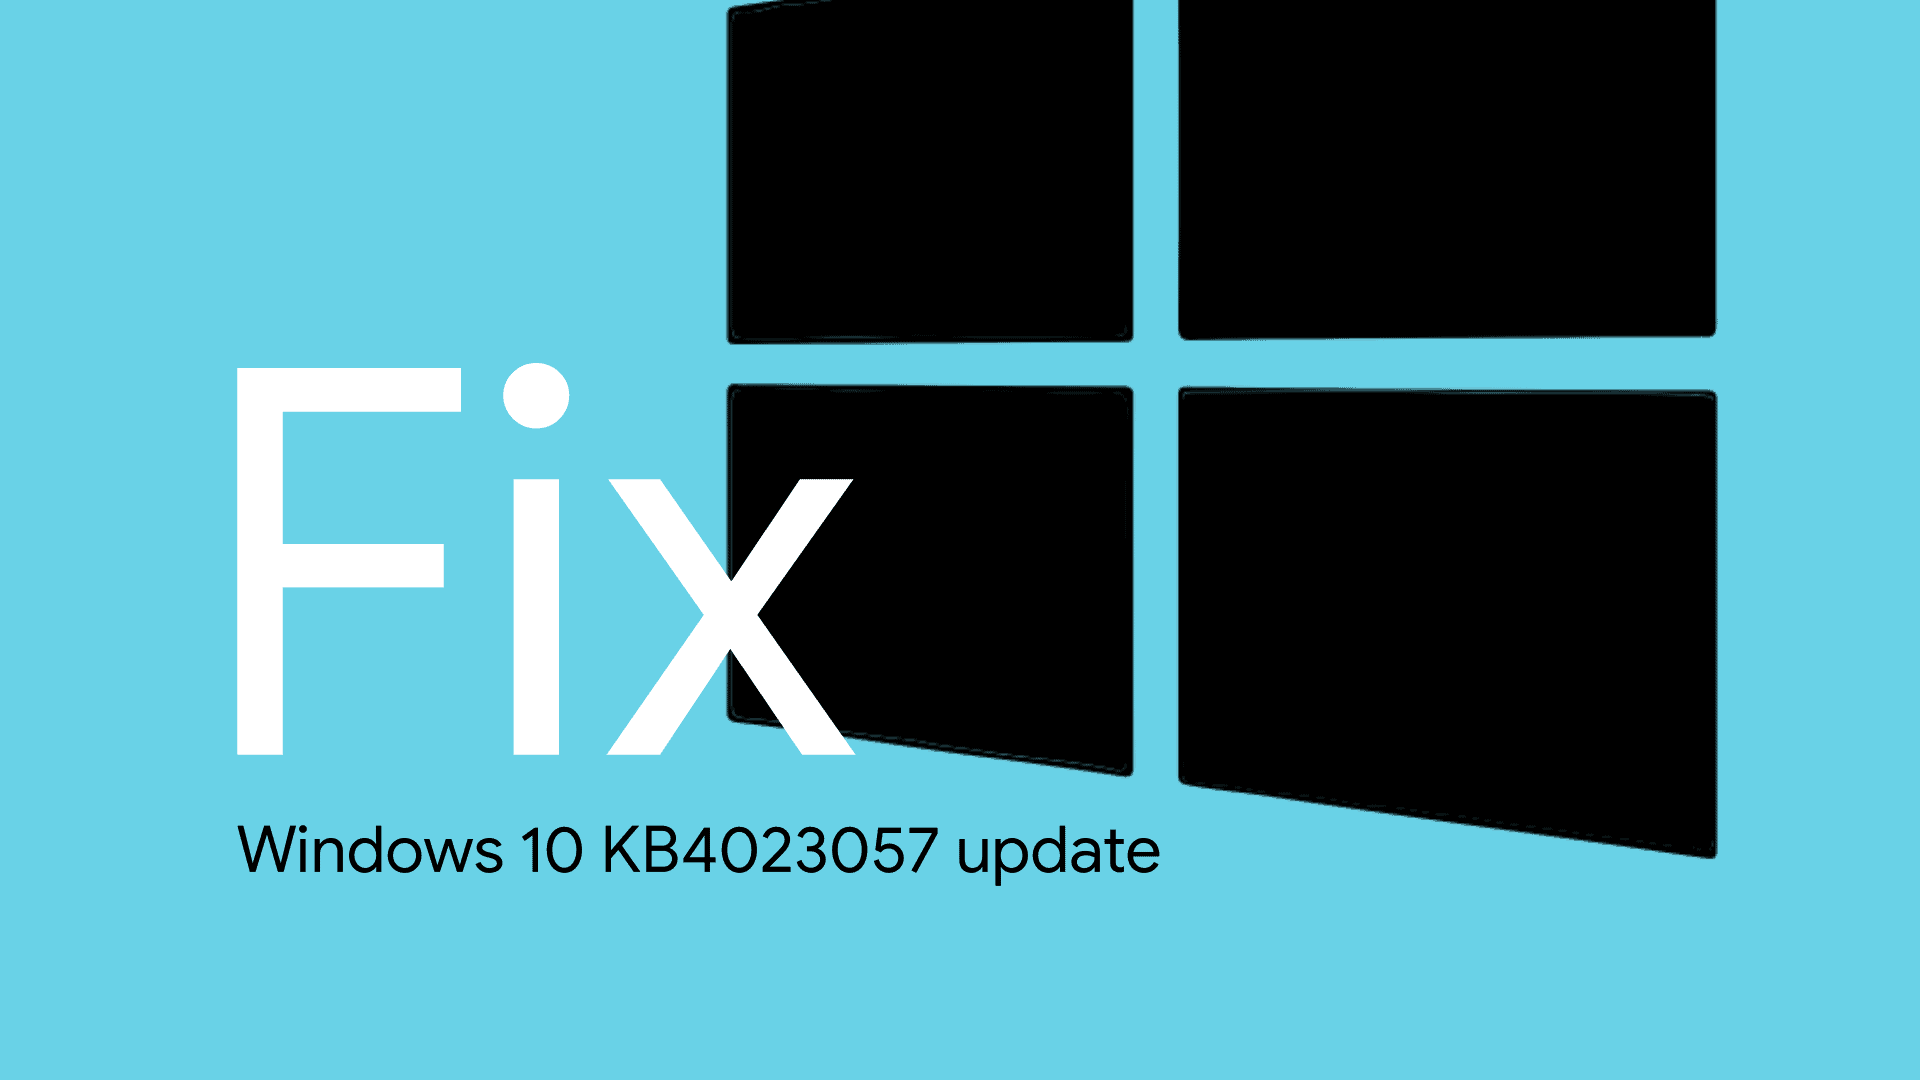 Windows 10 KB4023057 update installation fails? Stuck at 90%? Here's a fix